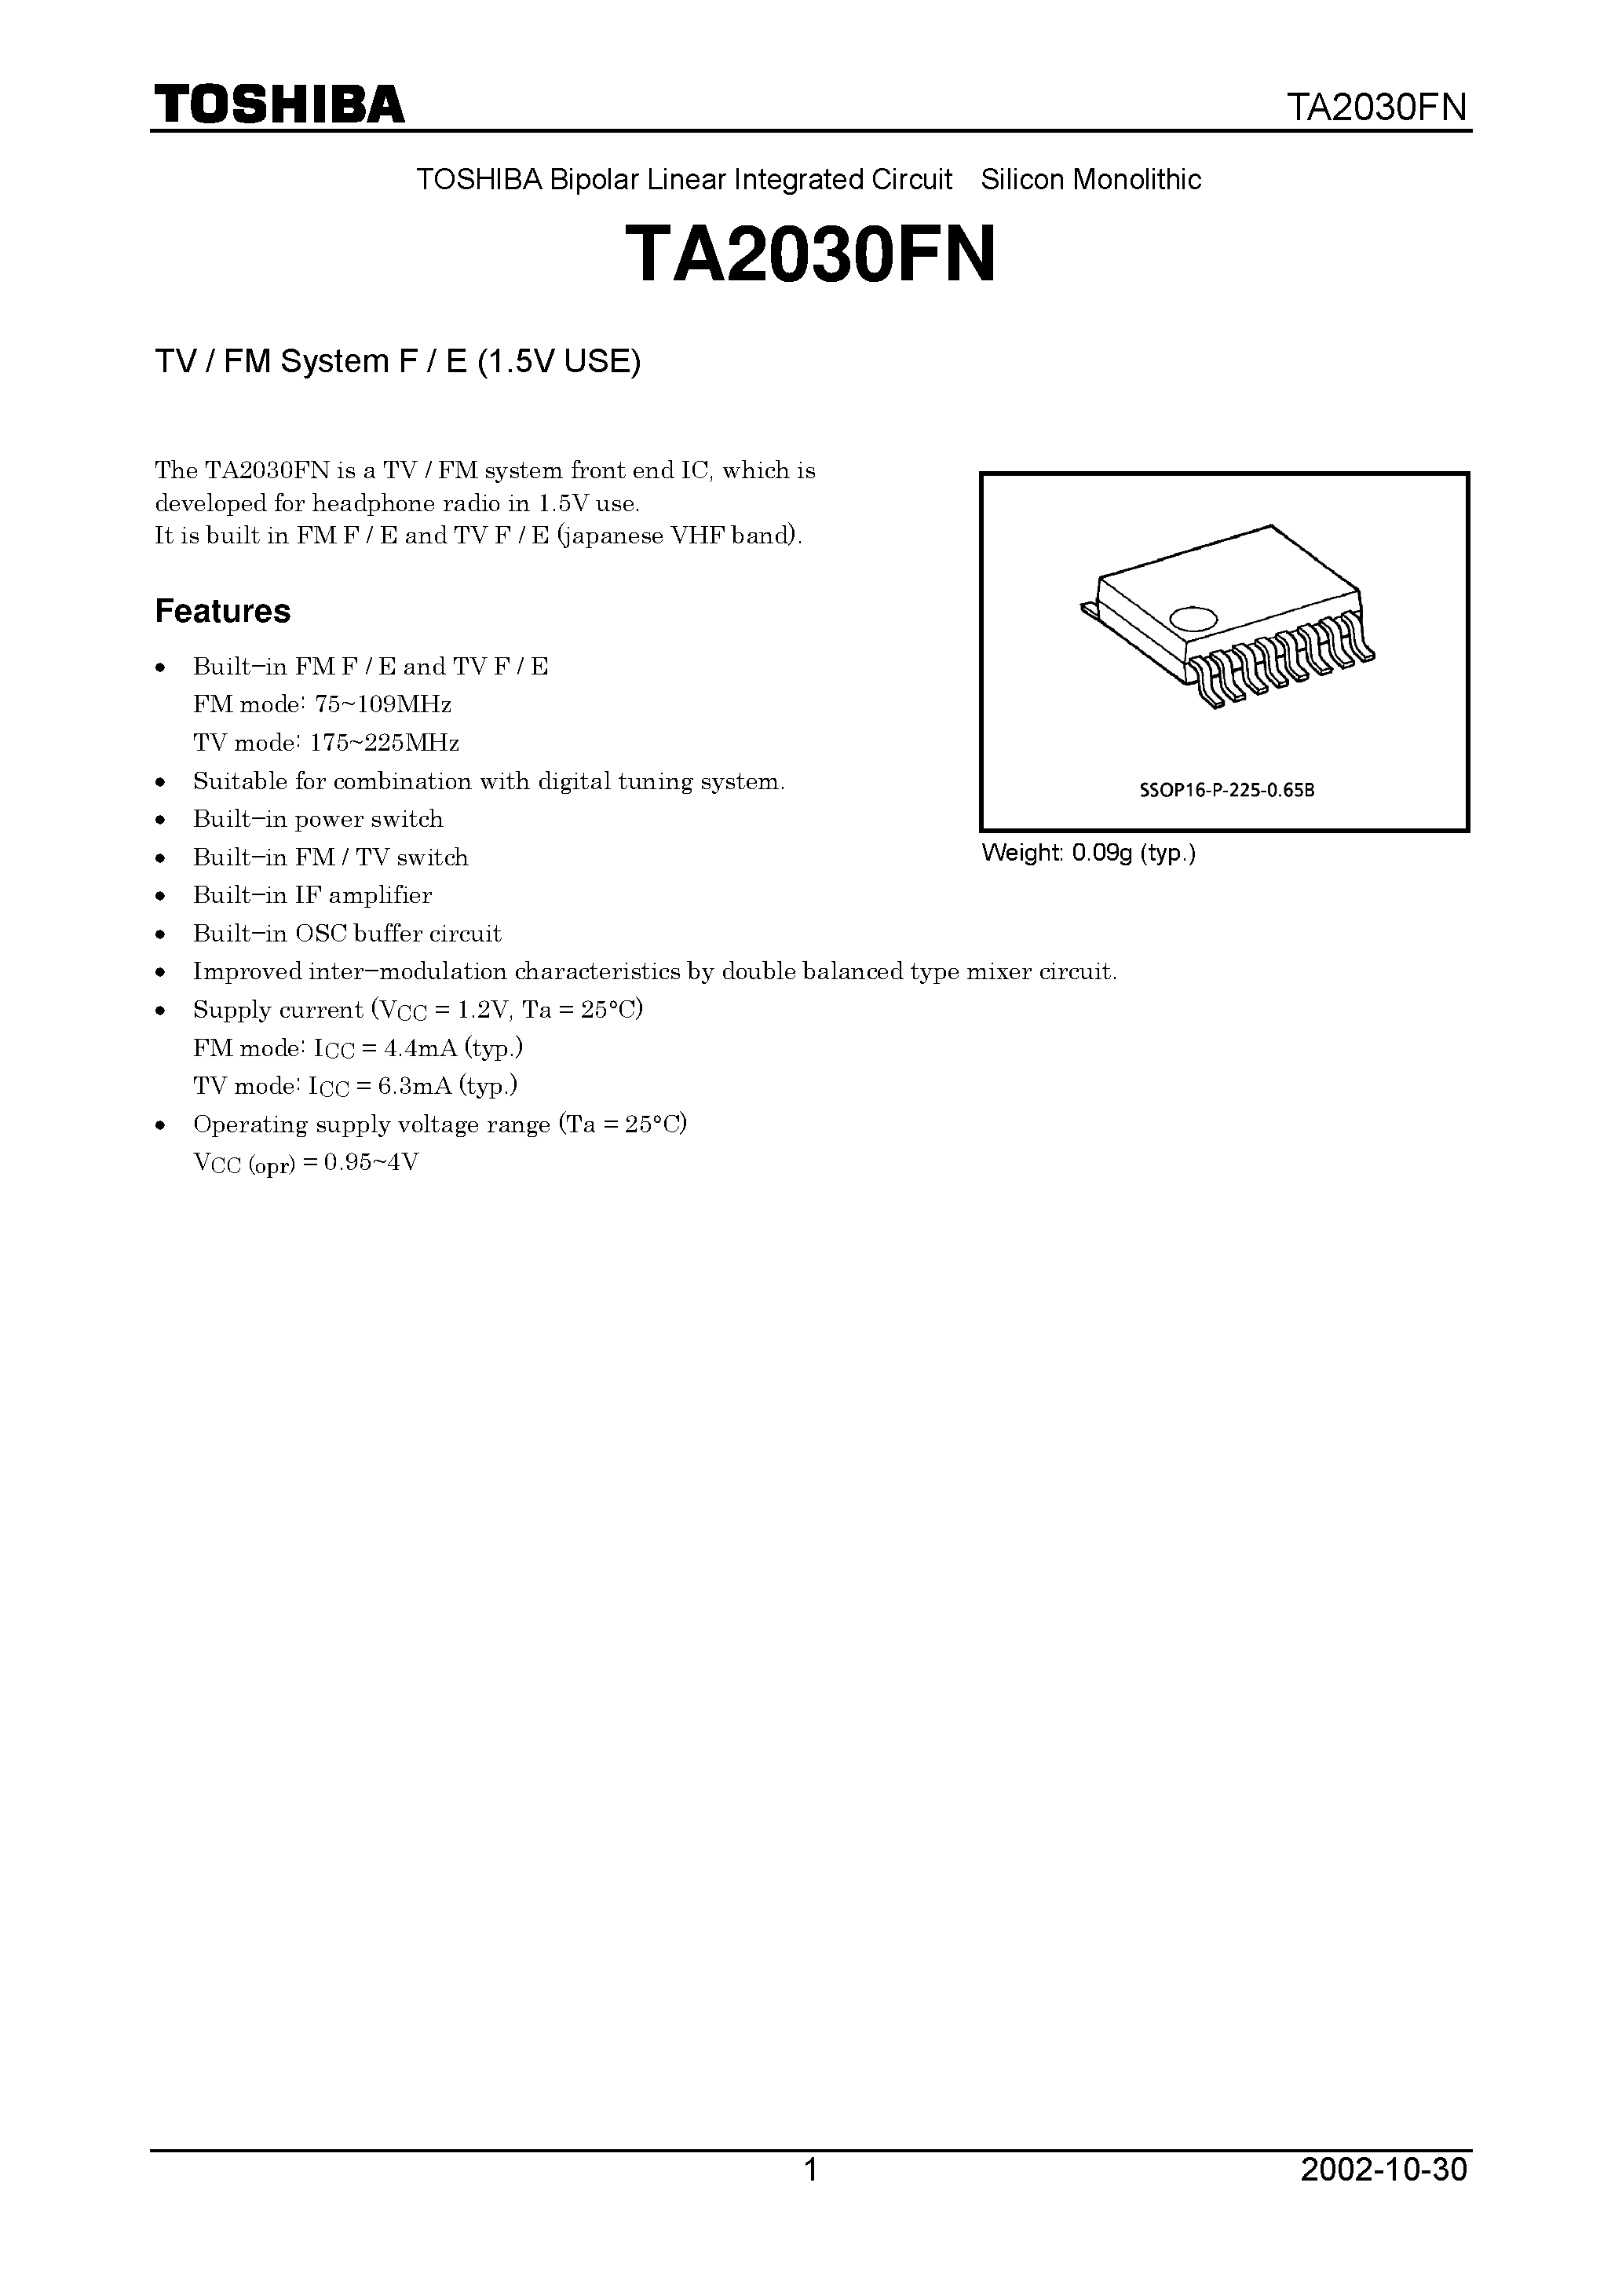 Datasheet TA2030FN - TV/FM SYSTEM F/E (1.5V USE) page 1